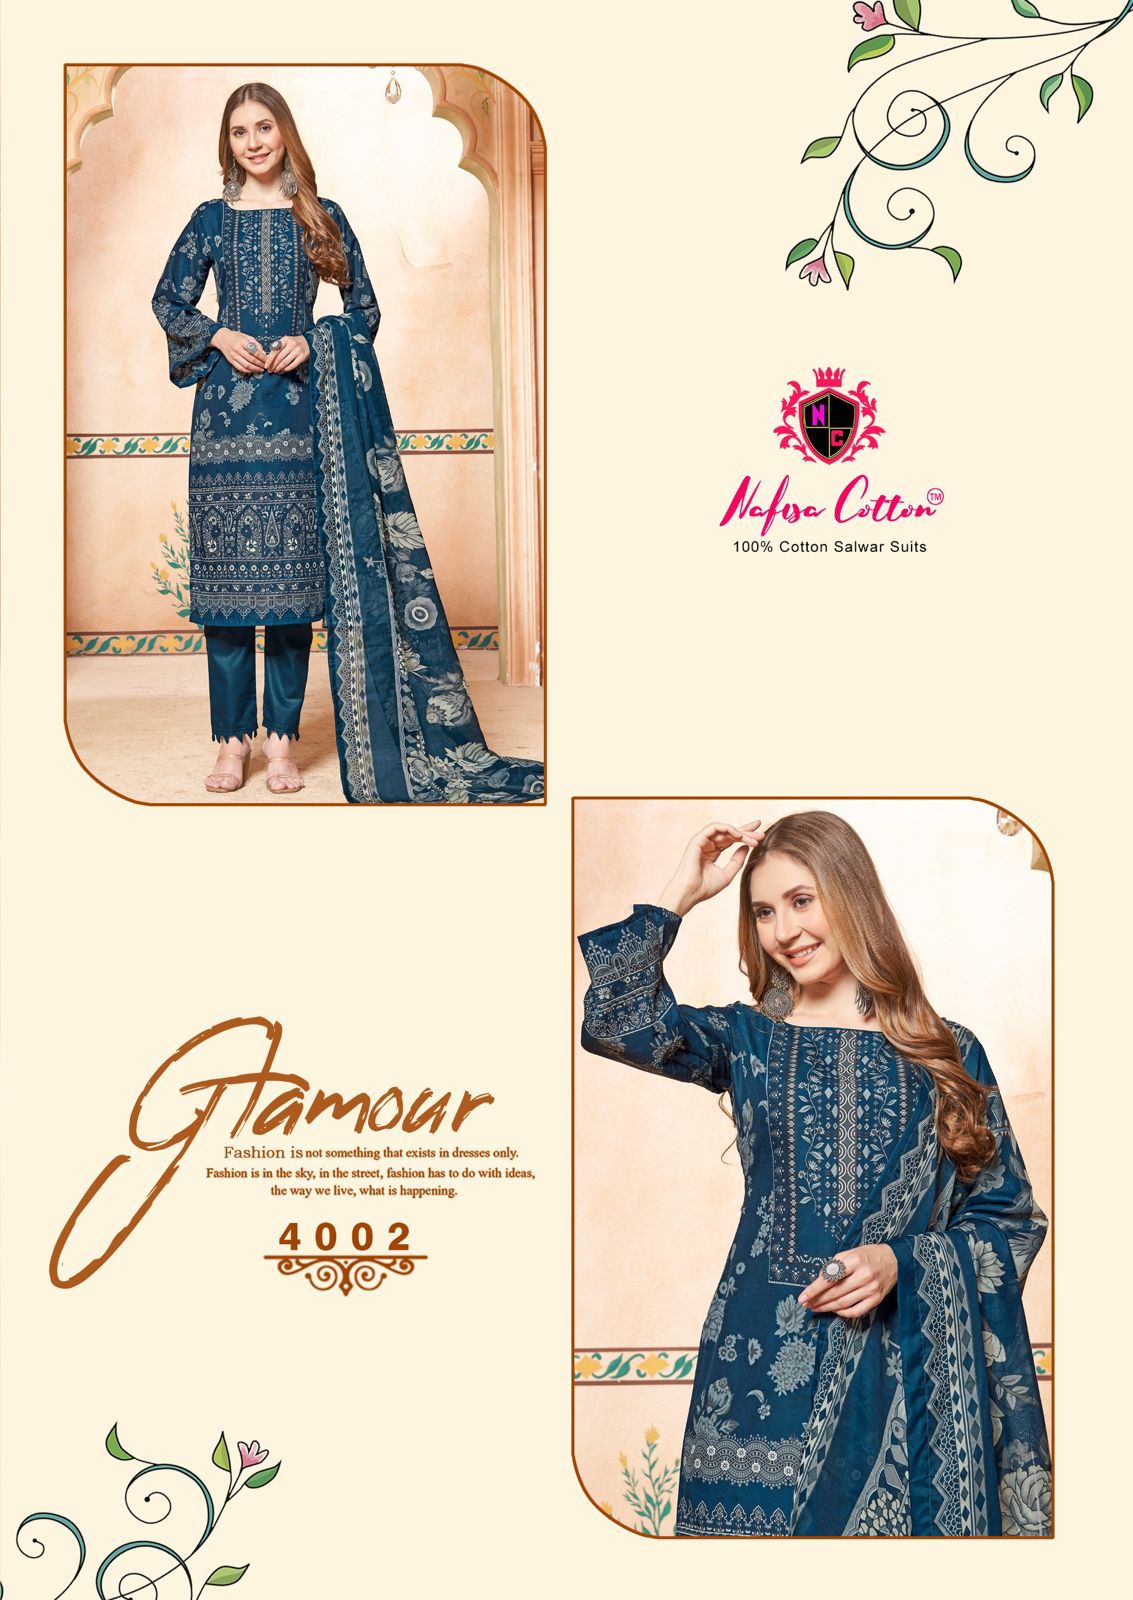 Esra Vol 4 Nafisa Cotton Karachi Salwar Suits